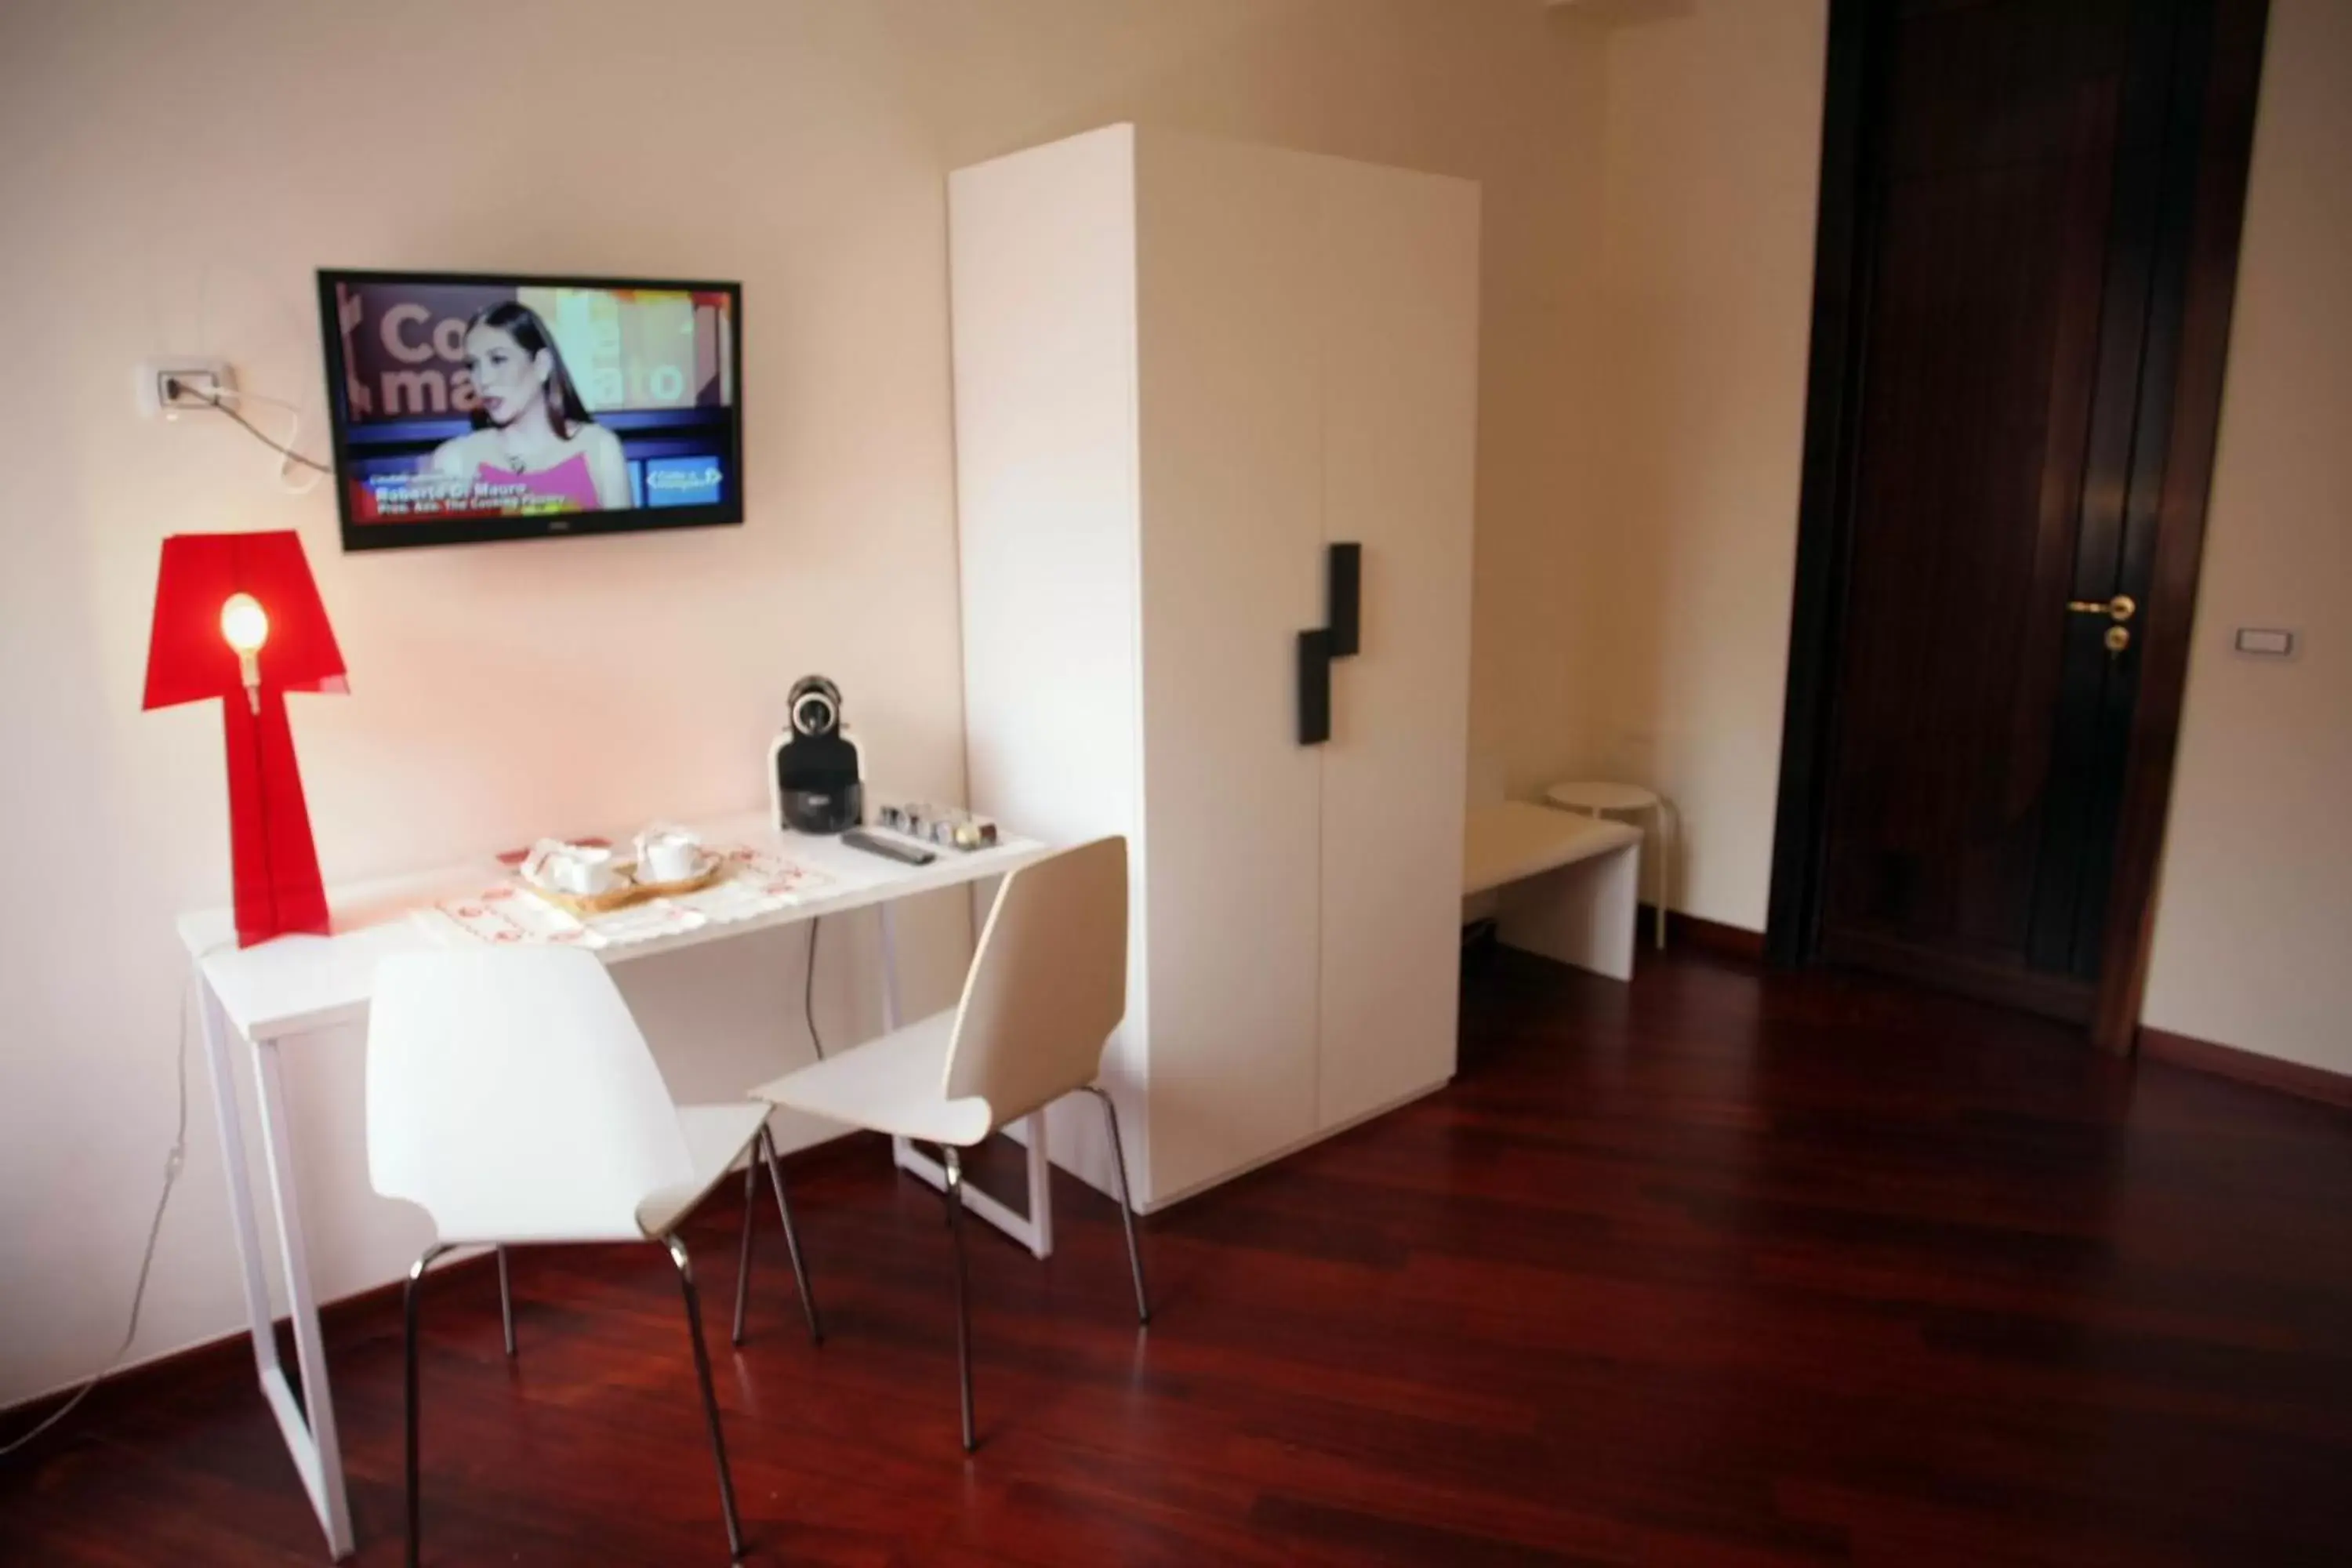 Coffee/tea facilities, TV/Entertainment Center in Clorinda's rooms